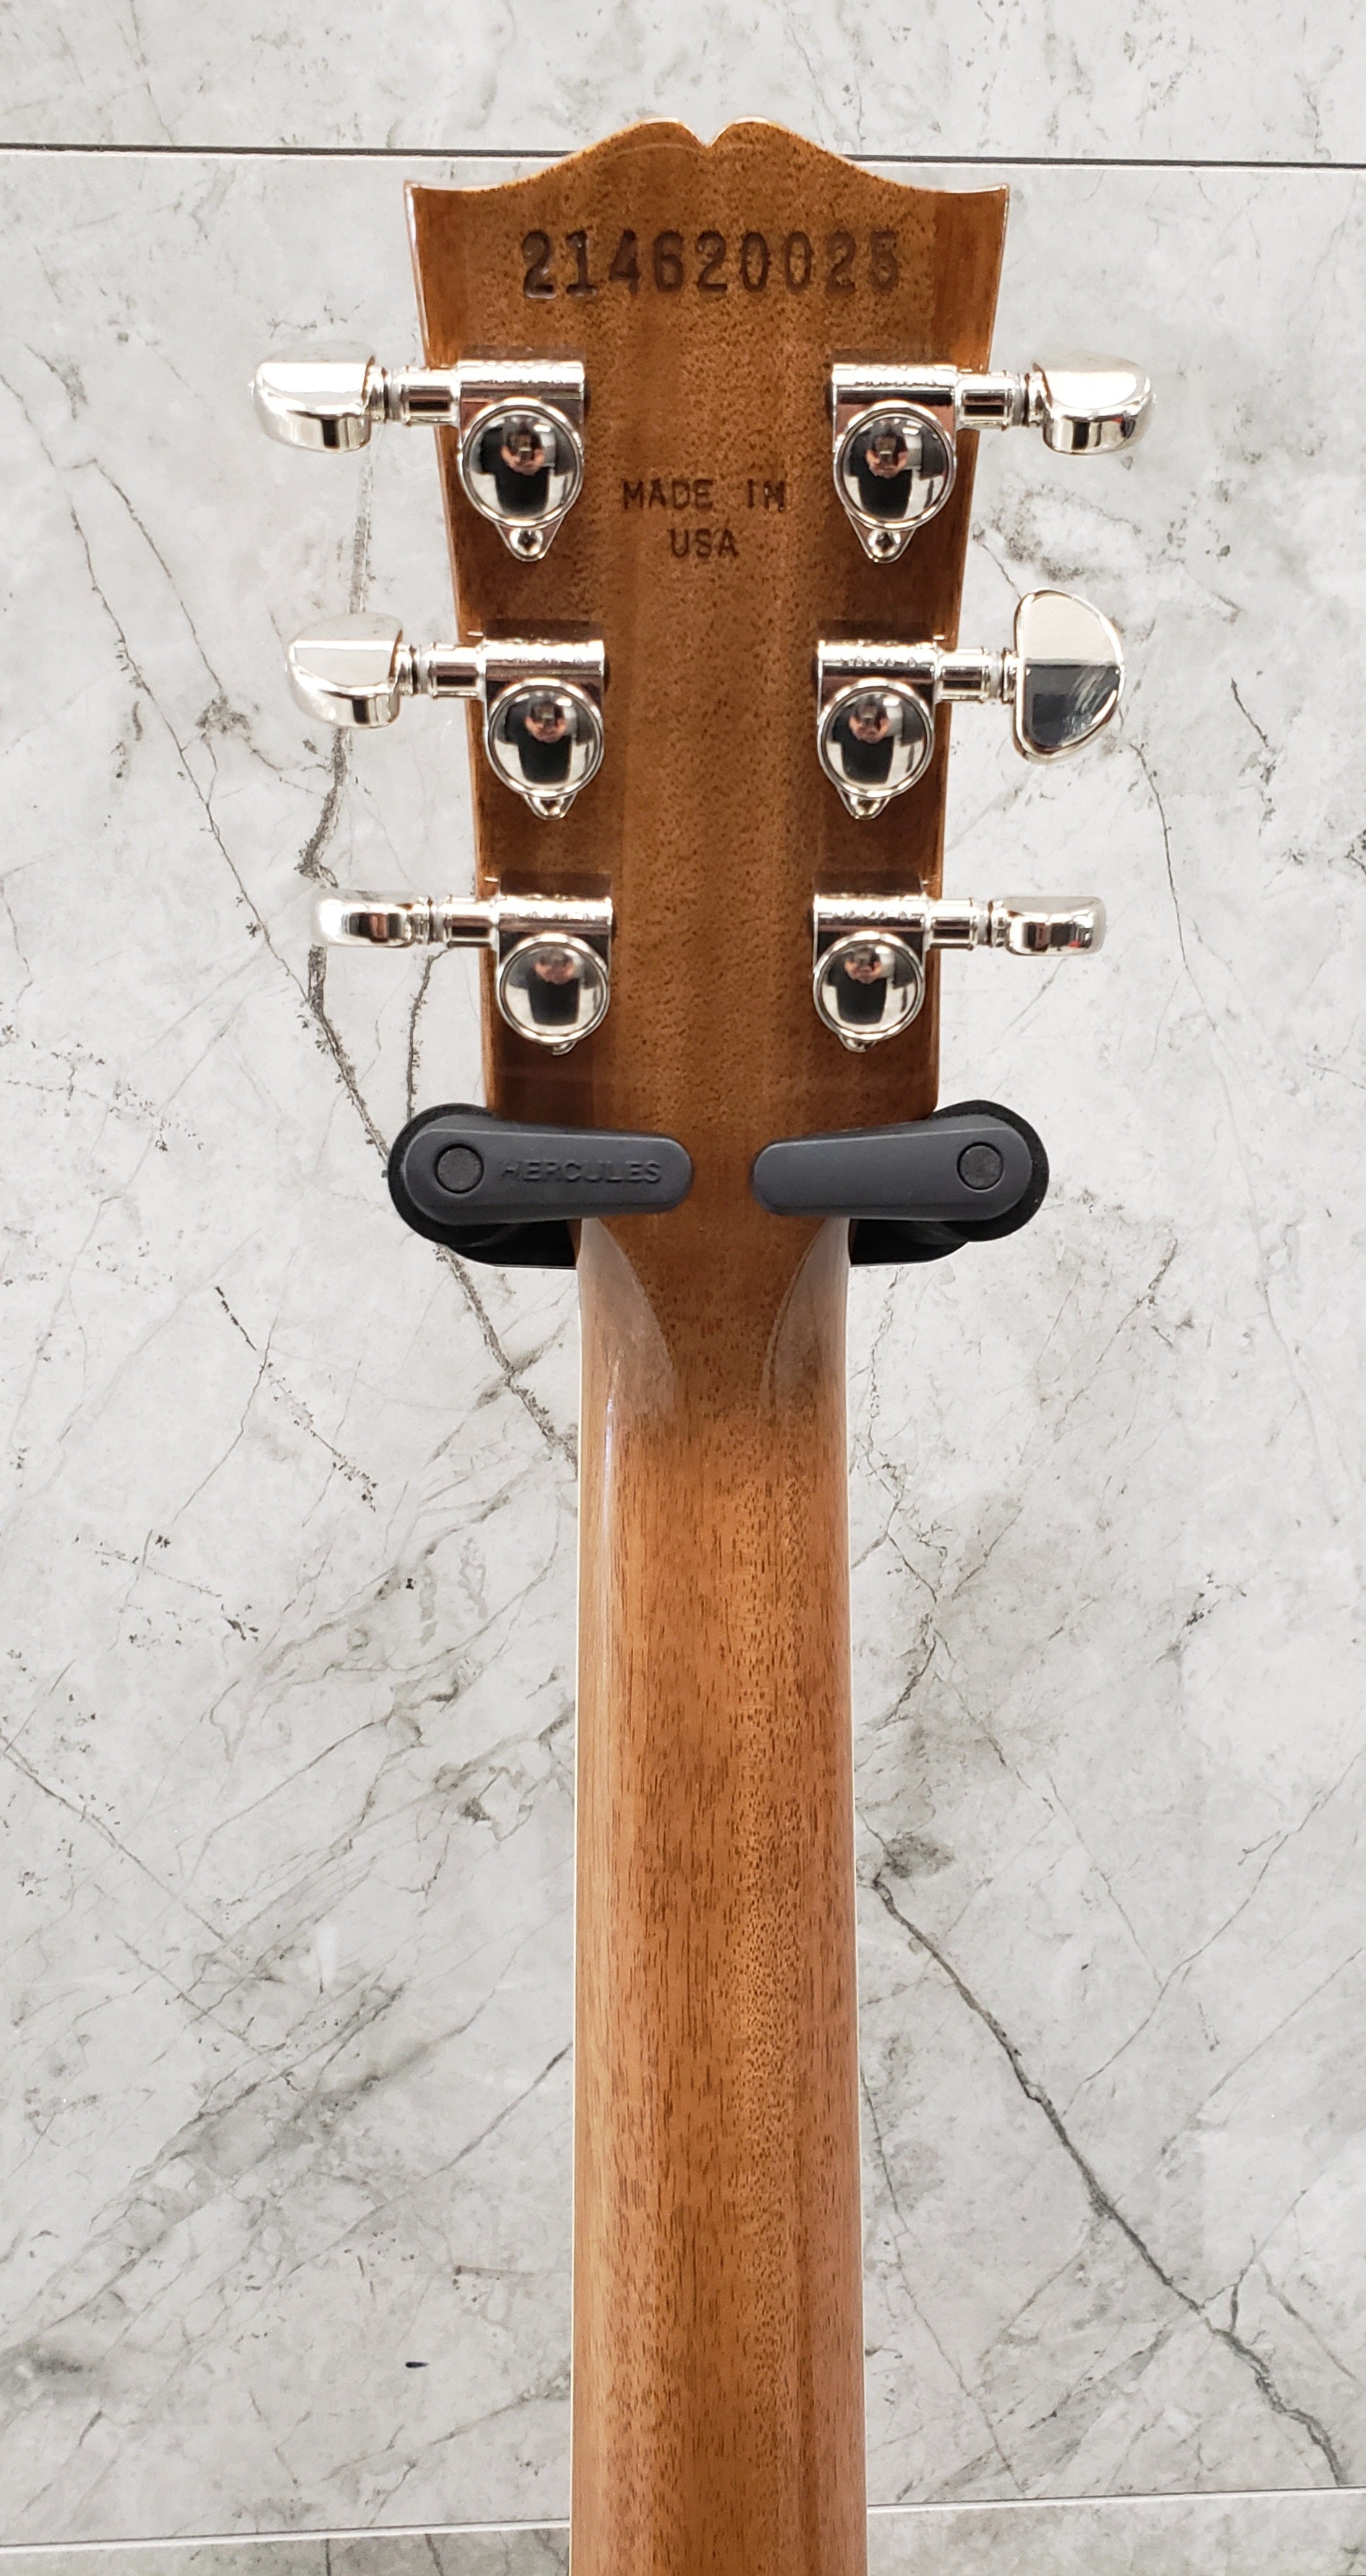 Gibson USA Les Paul Classic LPCS00HBNH Honeyburst SERIAL NUMBER 214620025 - 9.0 LBS